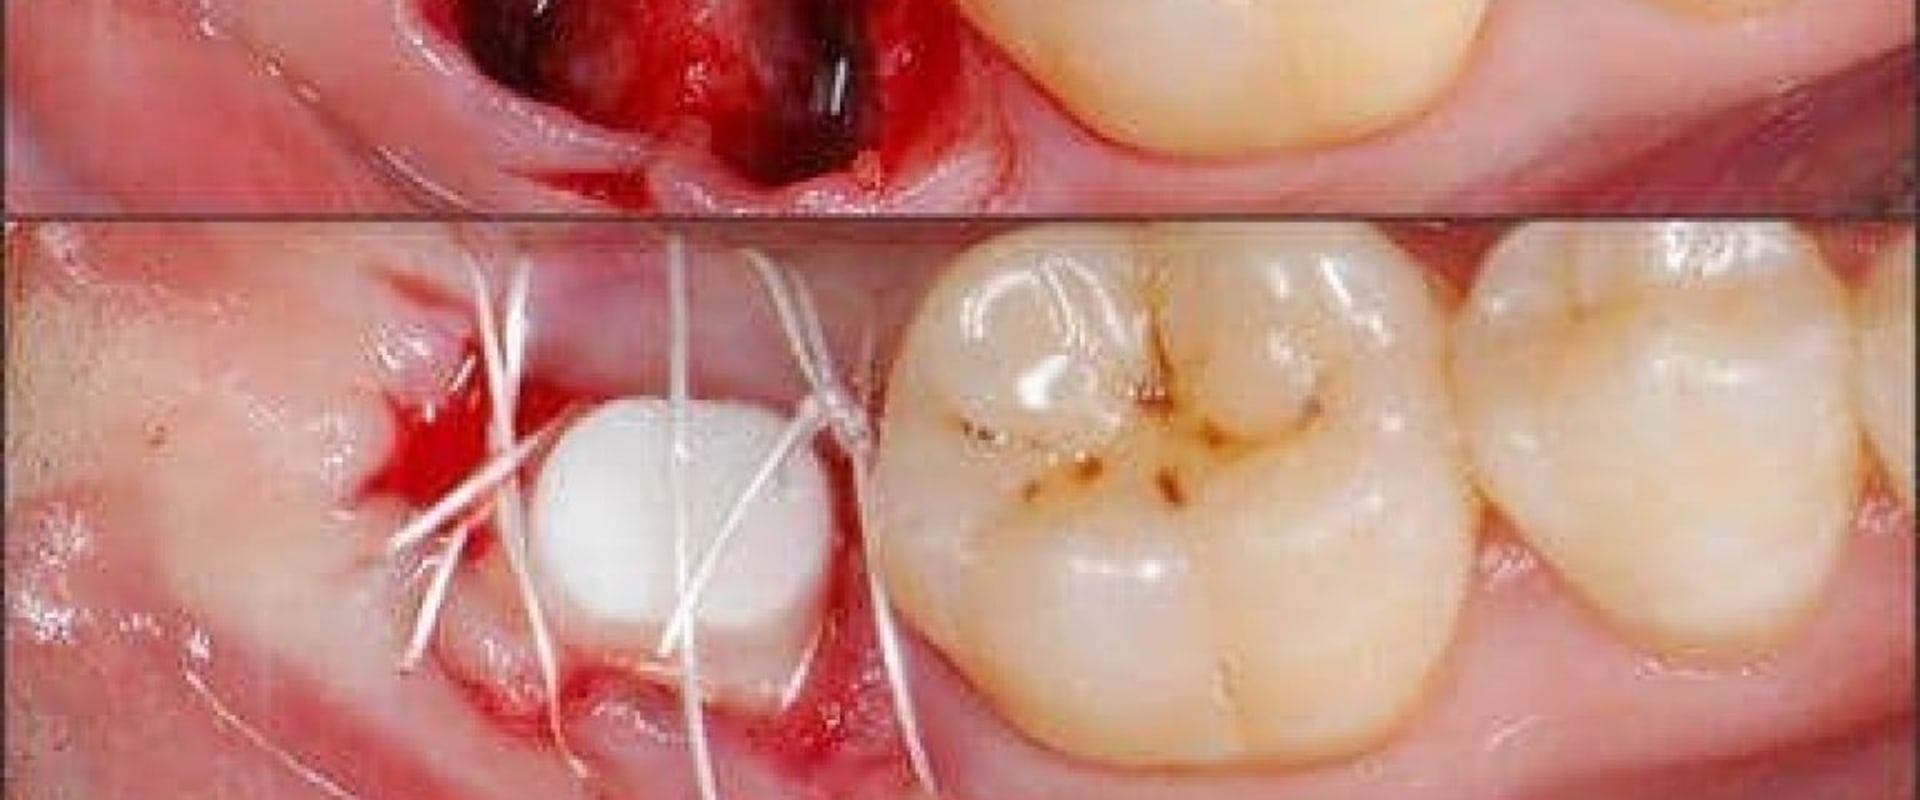 Do dental implants hurt?